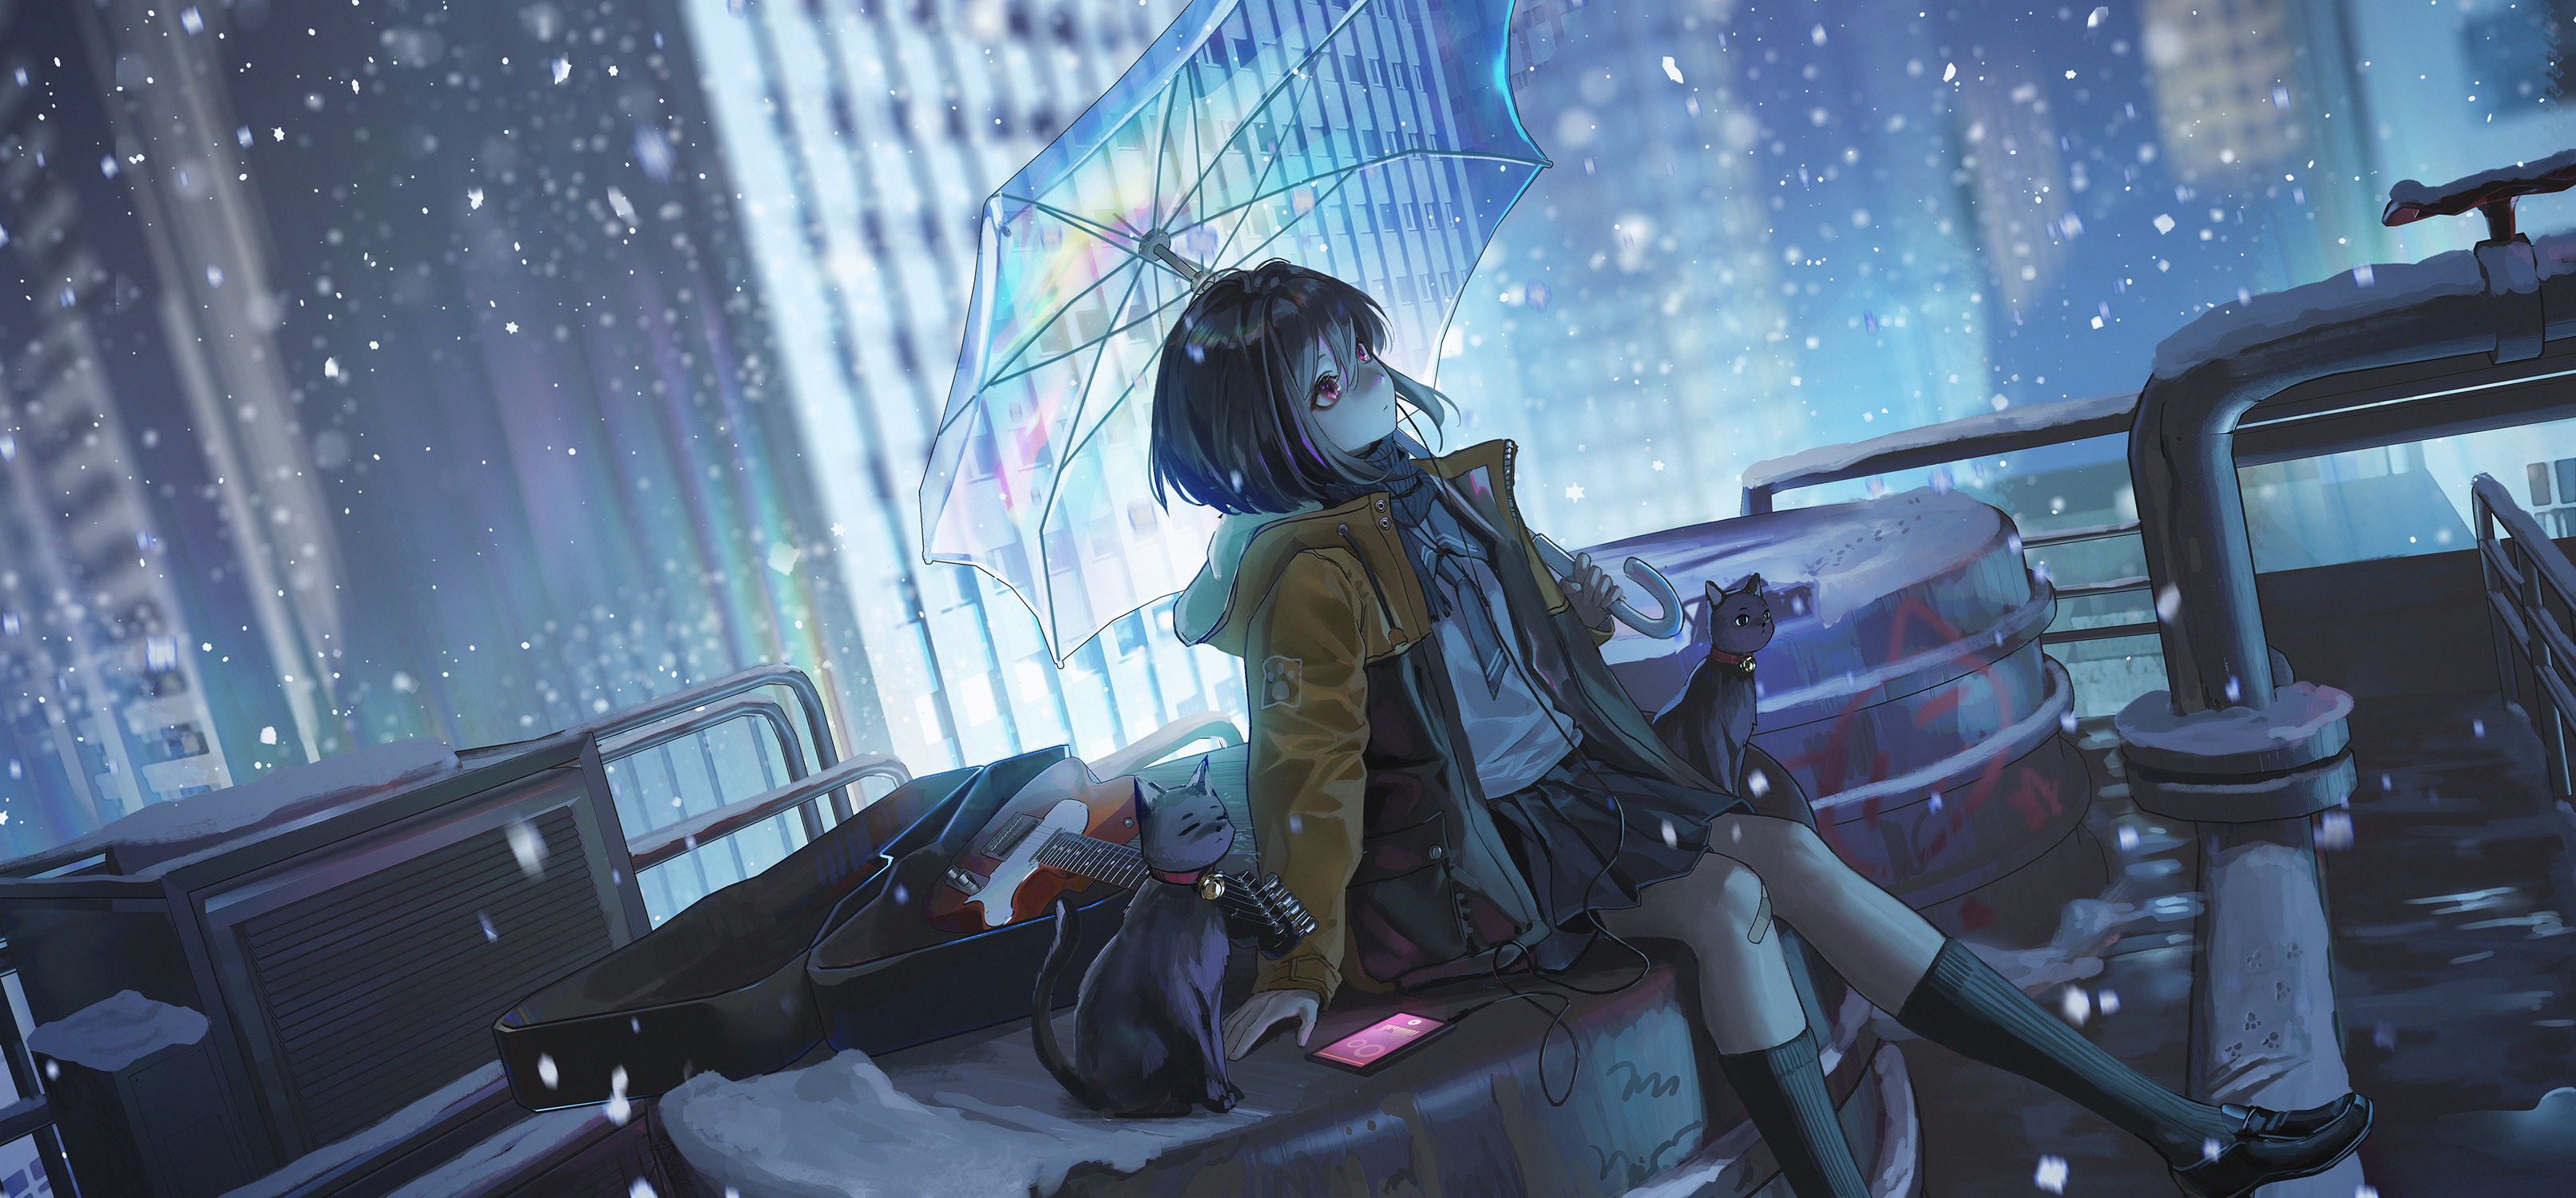 Anime umbrella girl dark Wallpapers Download